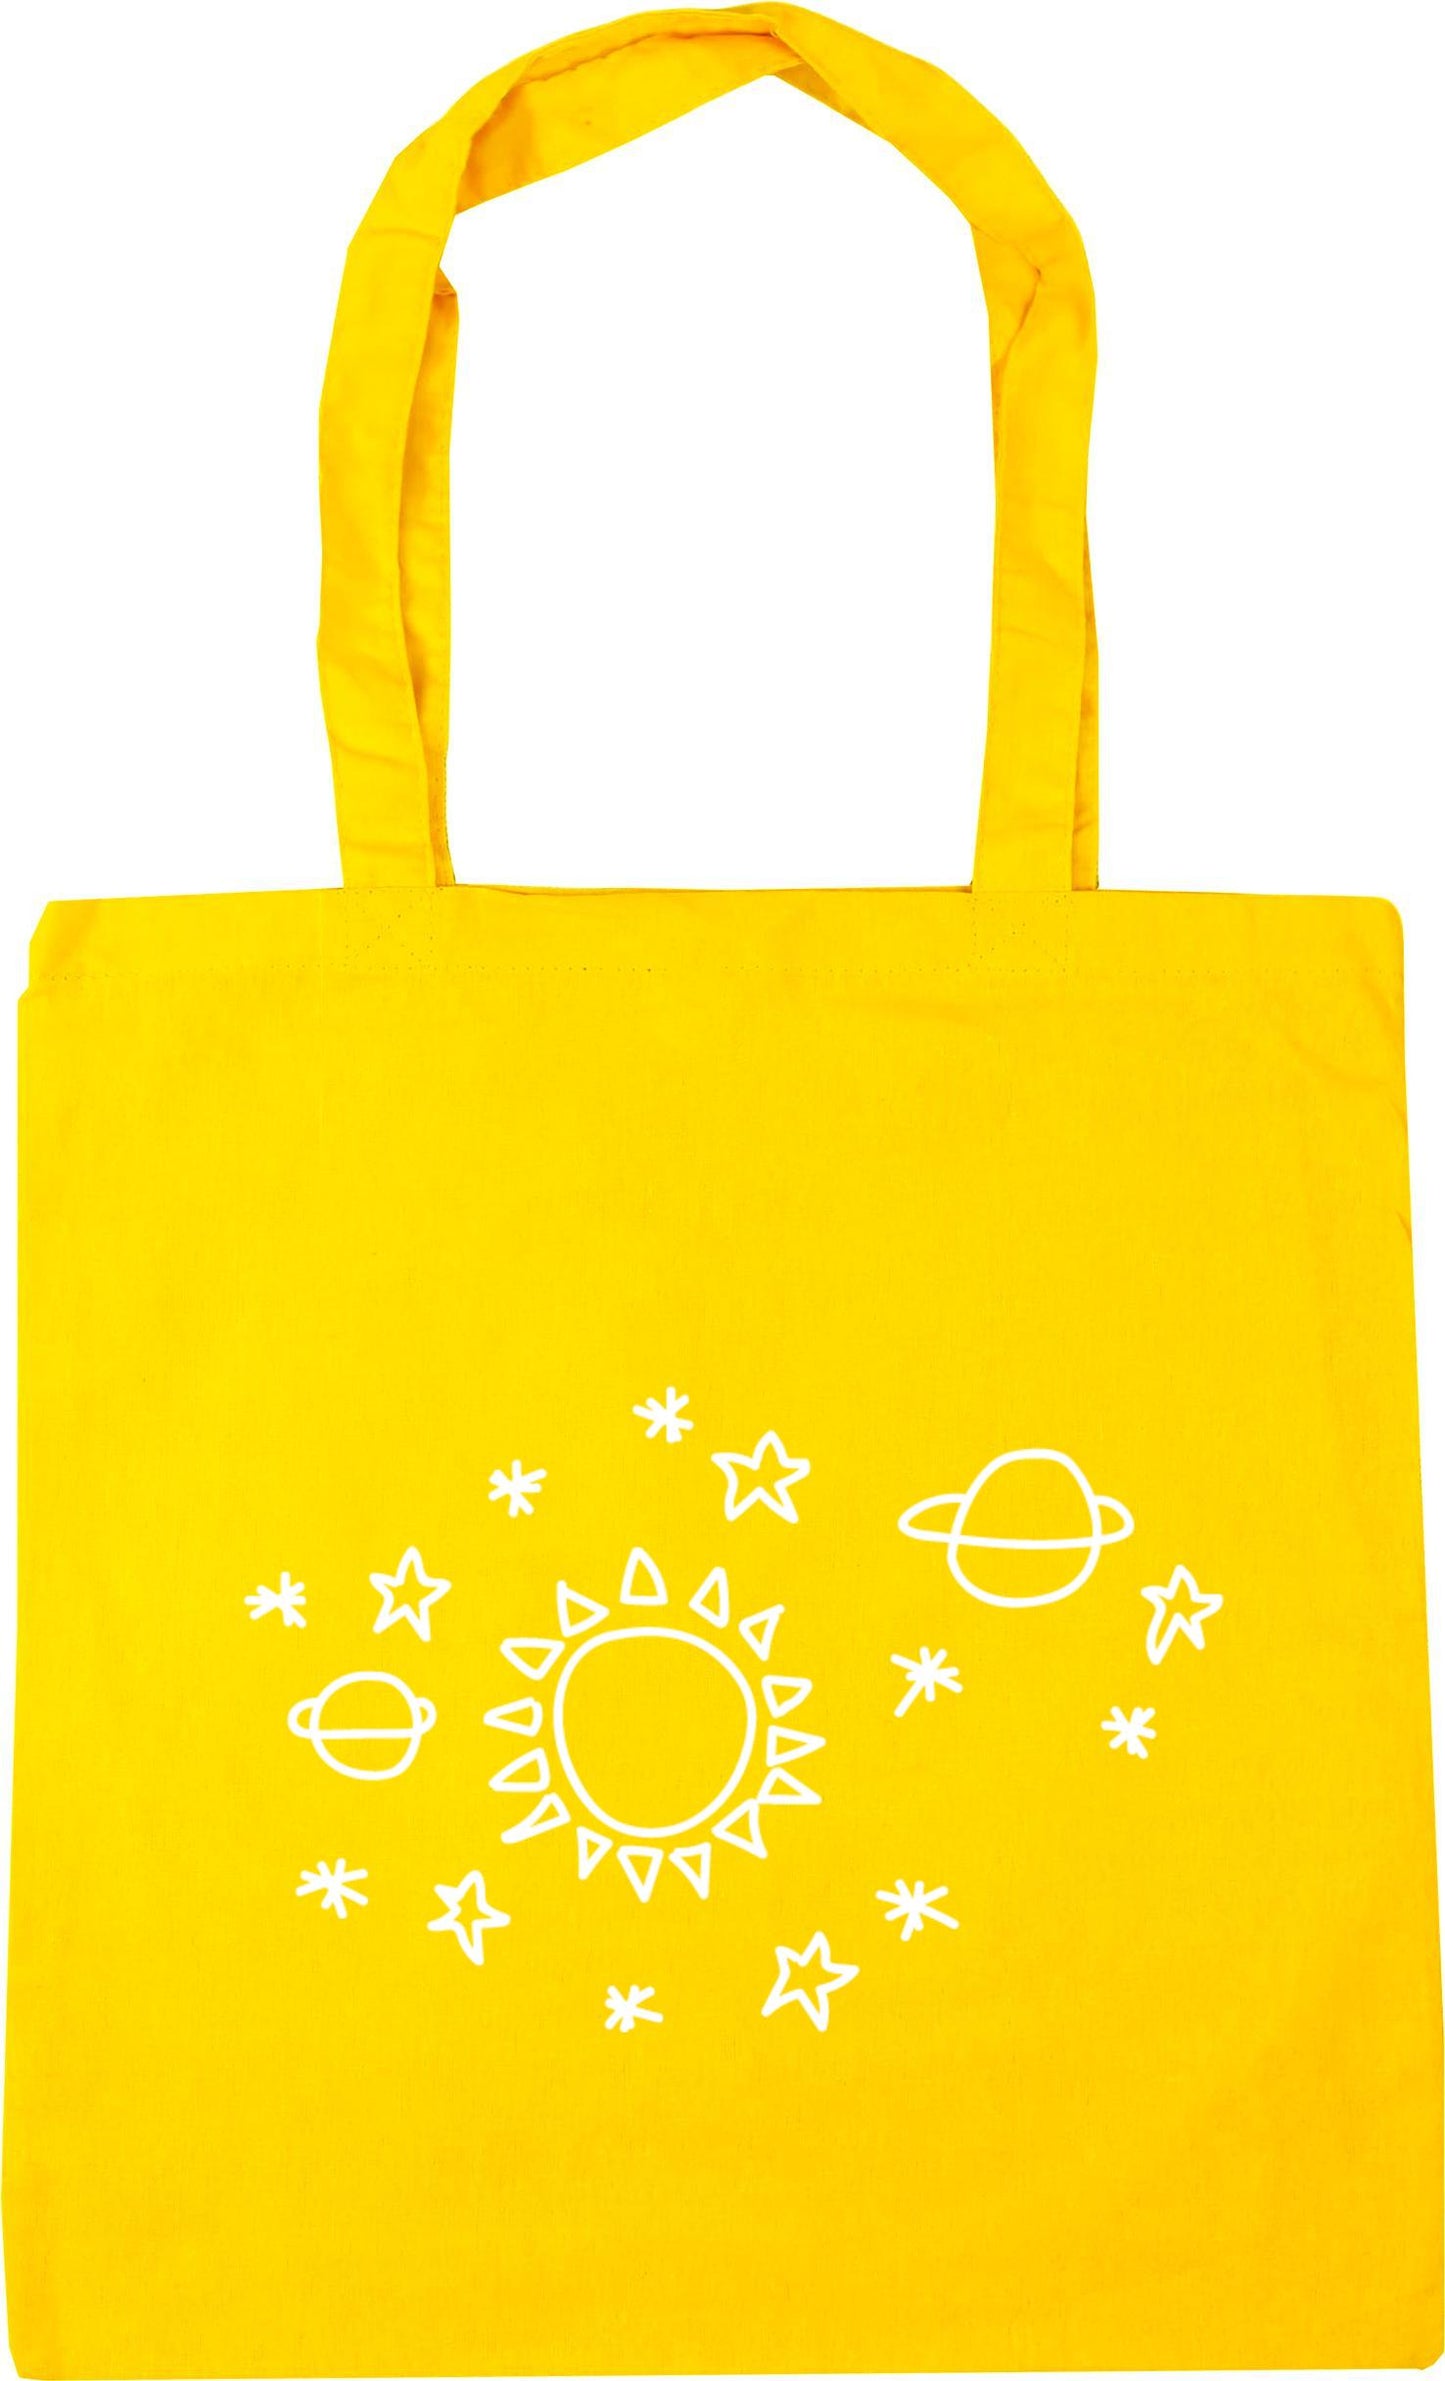 Sun star space pattern Tote Bag